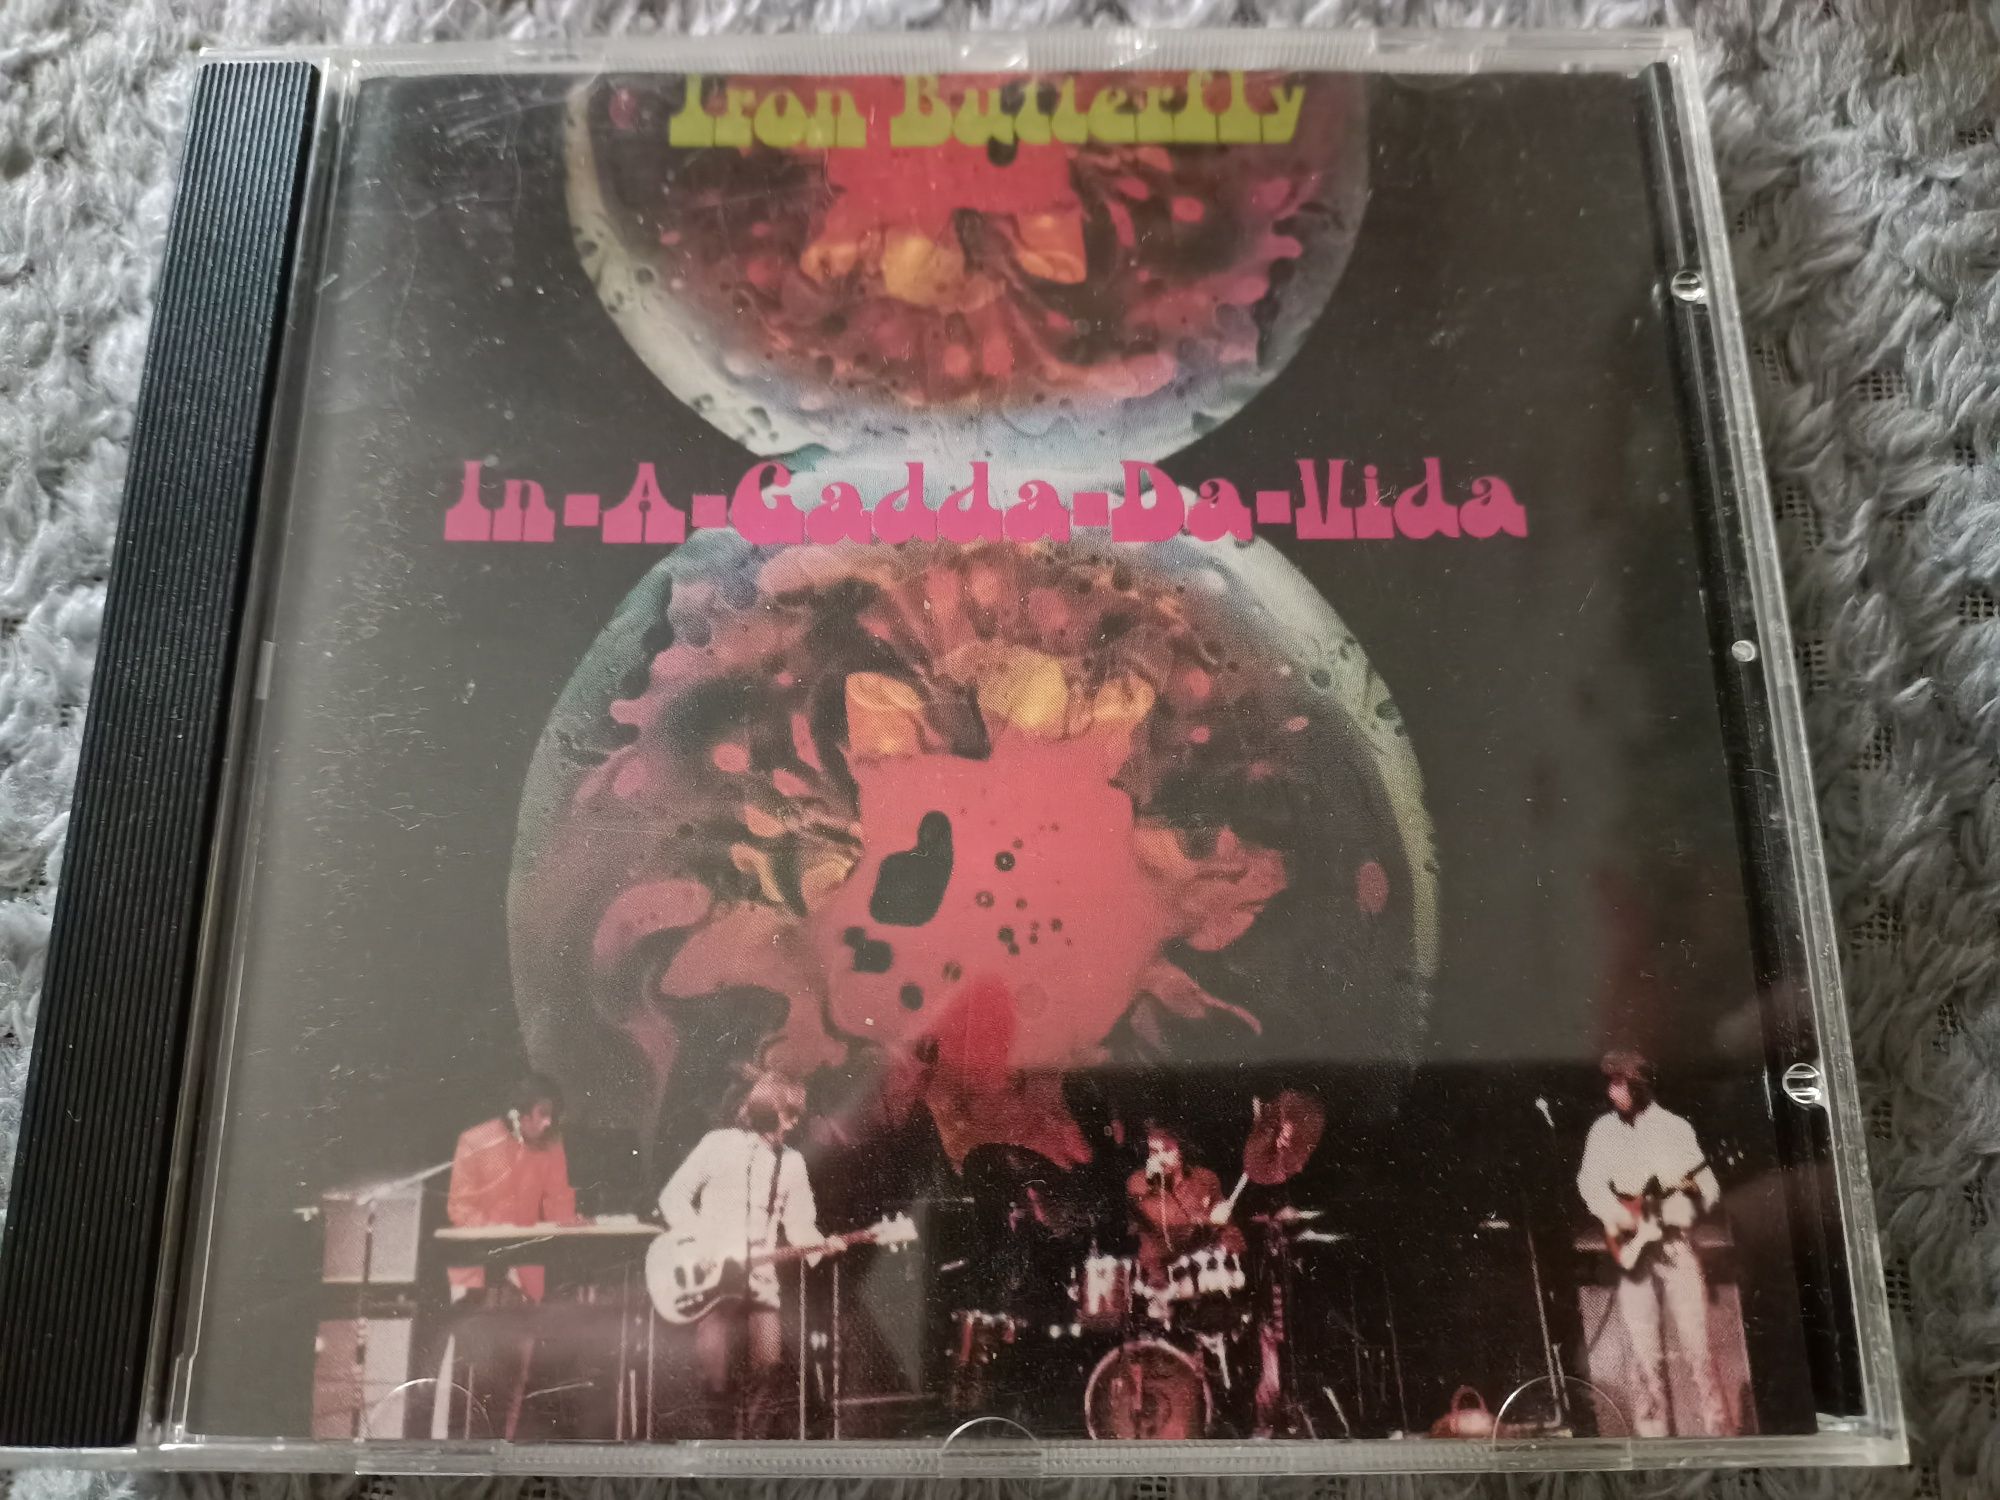 Iron Butterfly - In-A-Gadda-Da-Vida (CD, Album, RE, RP)(vg+)